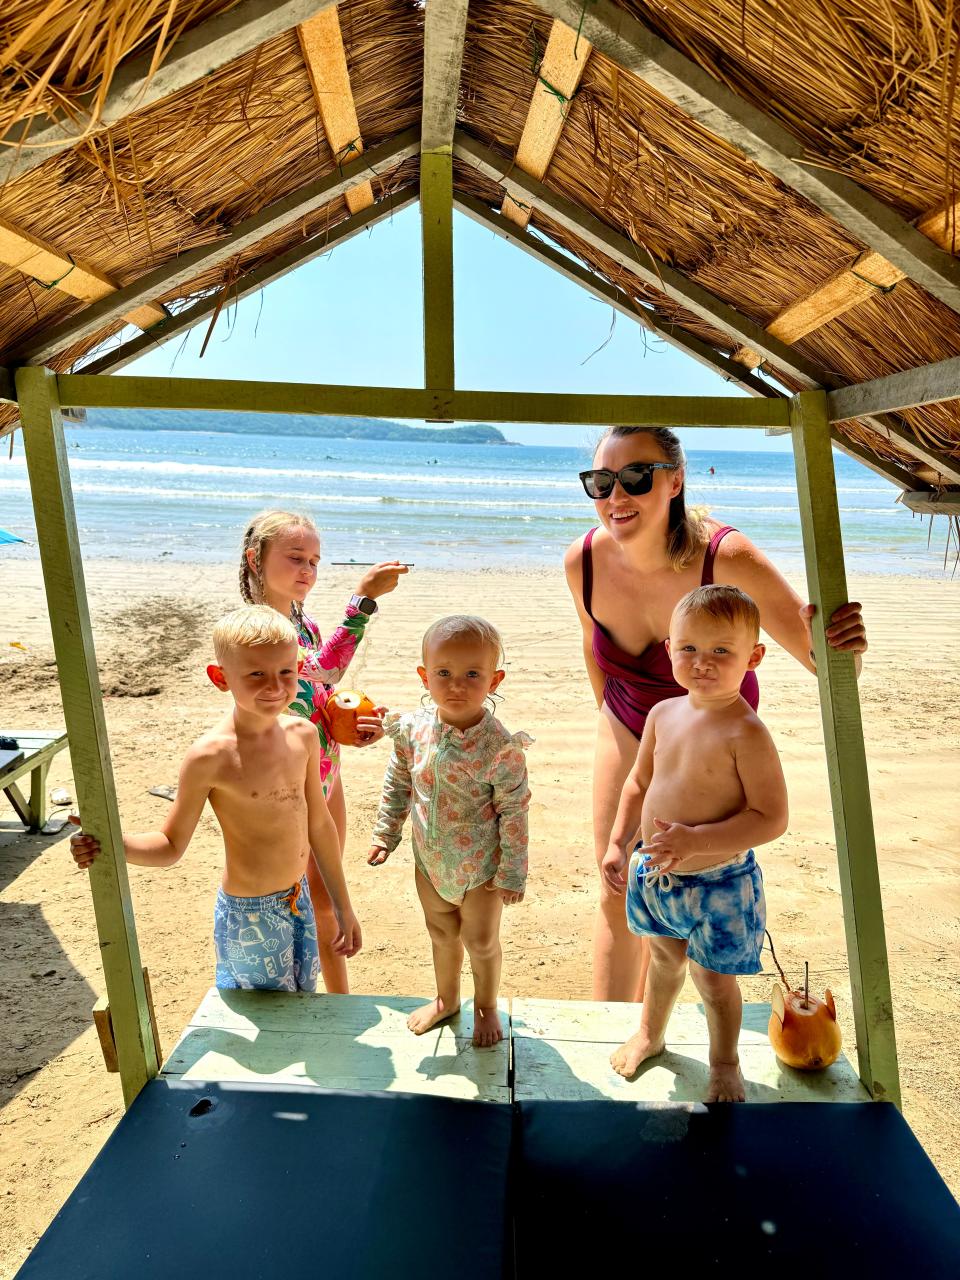 Karen Edwards and her children at the beach.